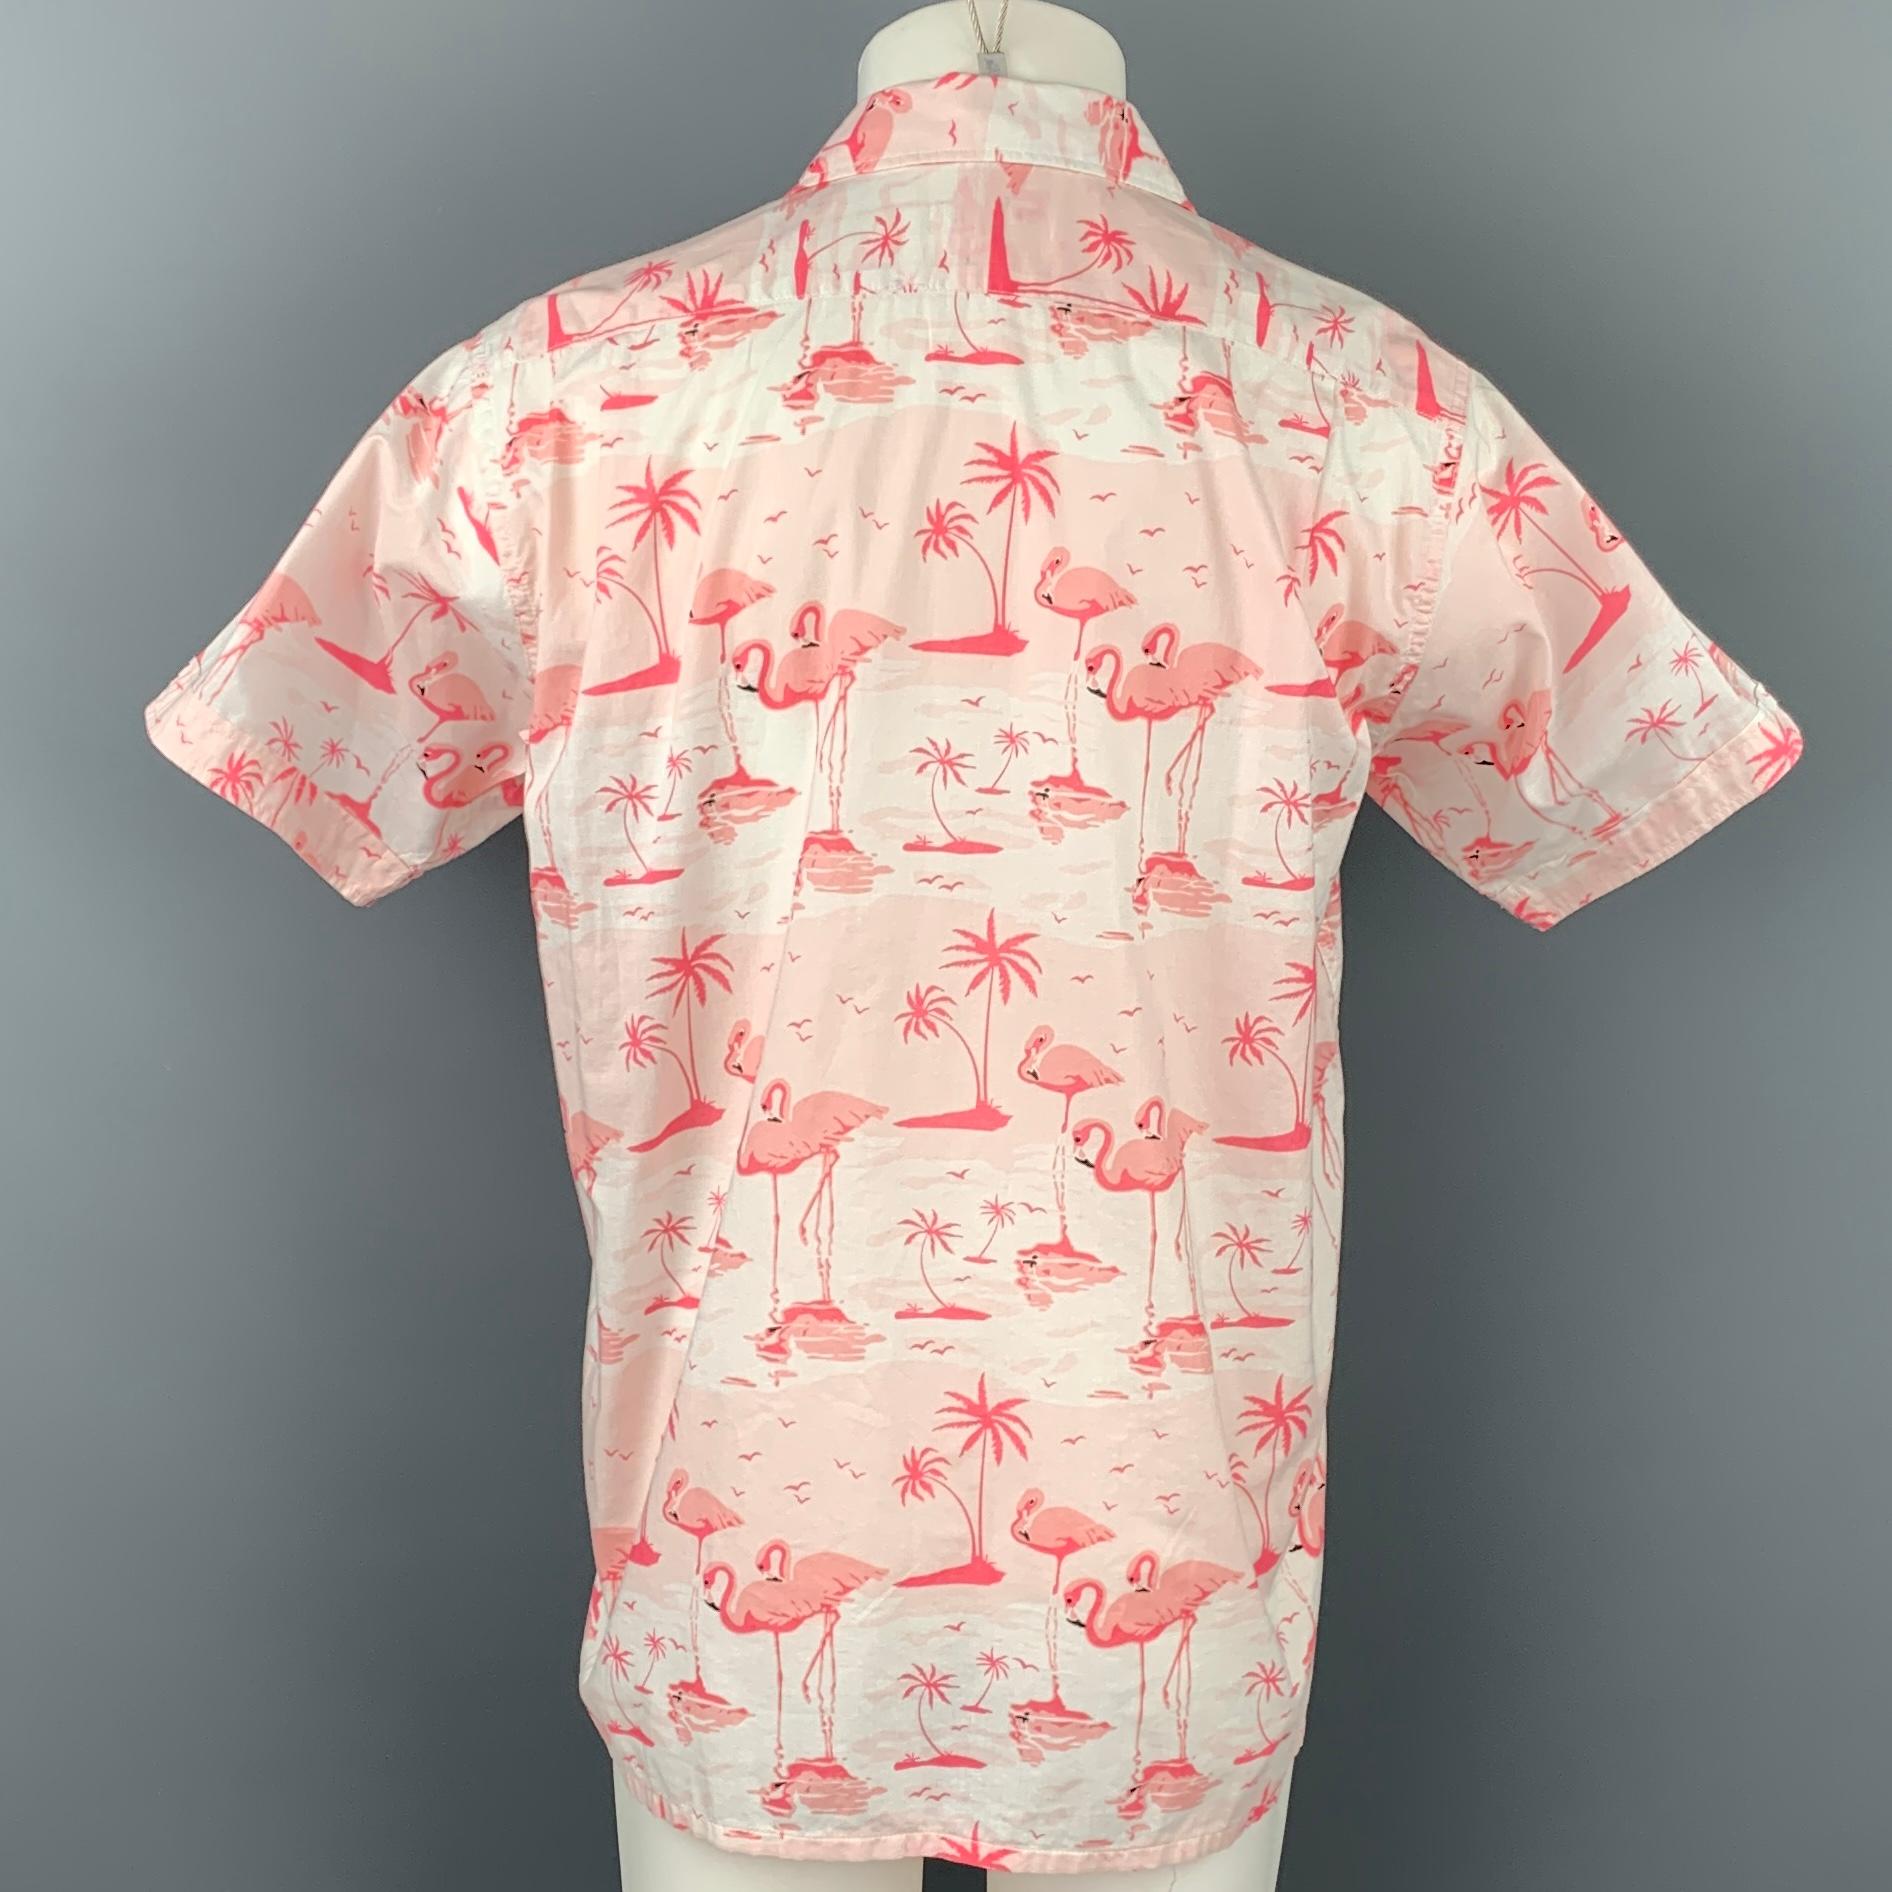 Beige ENGINEERED GARMENTS Size M Pink & White Flamingo Print Cotton Camp Shirt